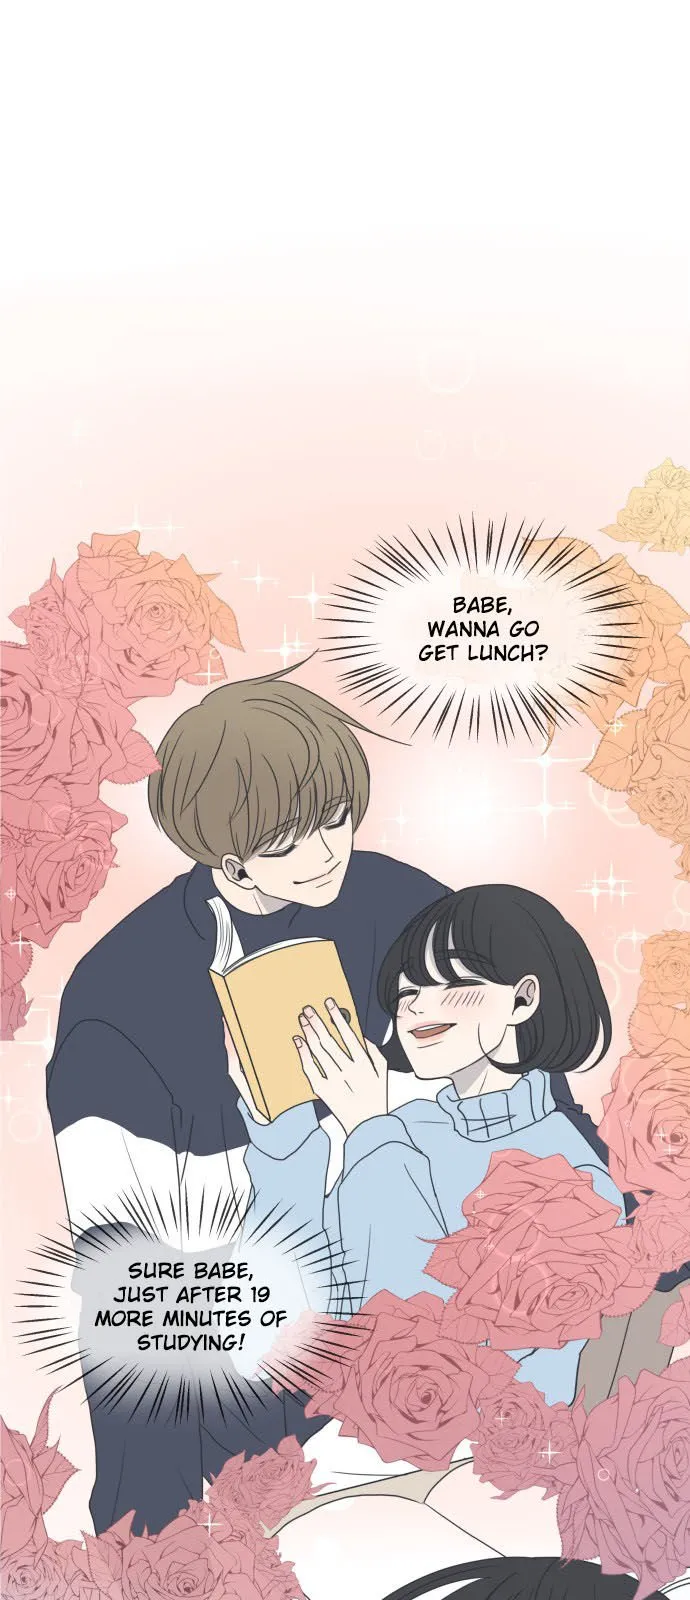 A Guide To Proper Dating A Guide to Proper Dating - Chapter 1 - Coffee Manga